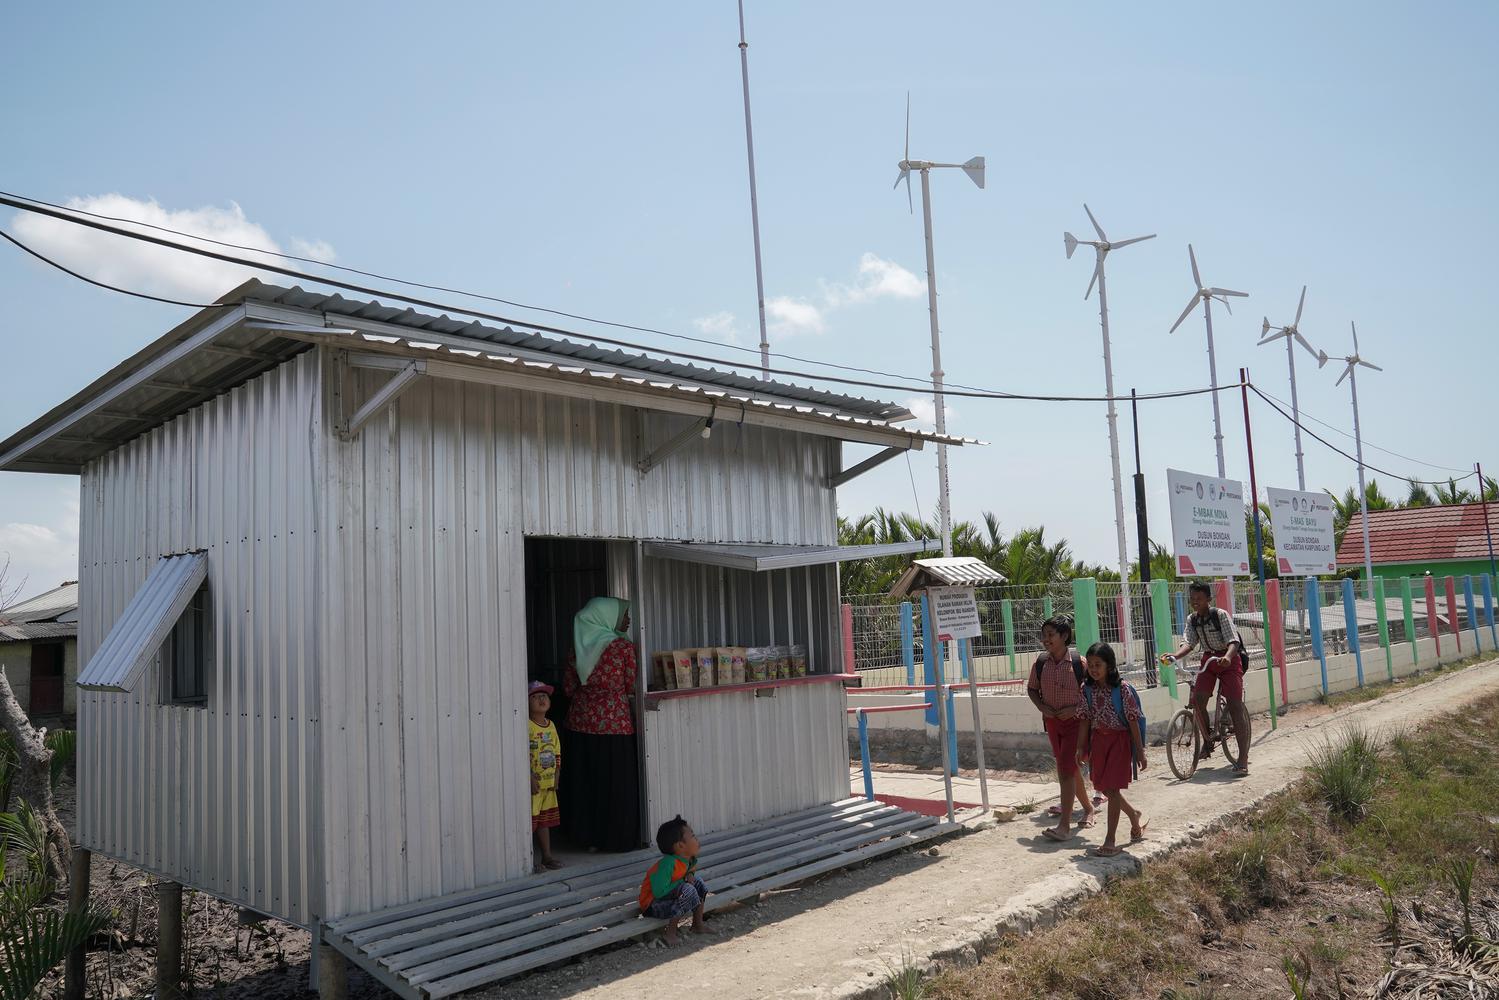 Warga beraktivitas di sekitar lokasi pembangkit listrik tenaga surya dan angin yang menjadi sumber listrik utama di Dusun Bondan, Kampung Laut, Cilacap, Jawa Tengah, Kamis (24/10/2019). Sebanyak 37 Kepala Keluarga memanfaatkan suplai listrik dari pembangk